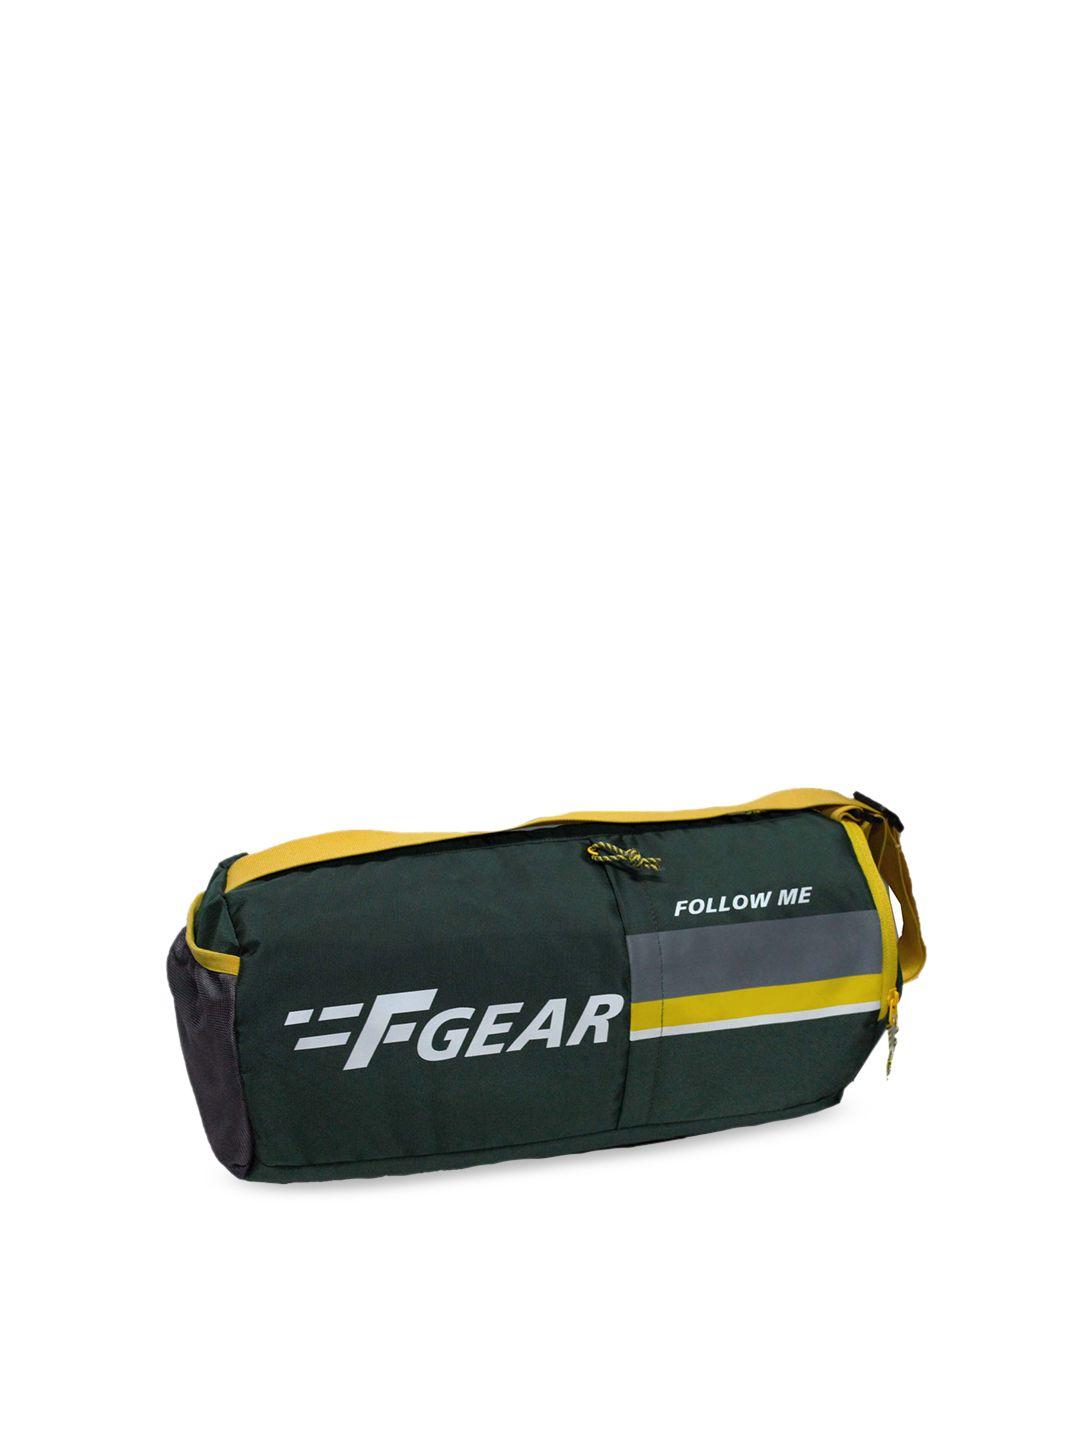 f gear unisex green & yellow printed duffle bag